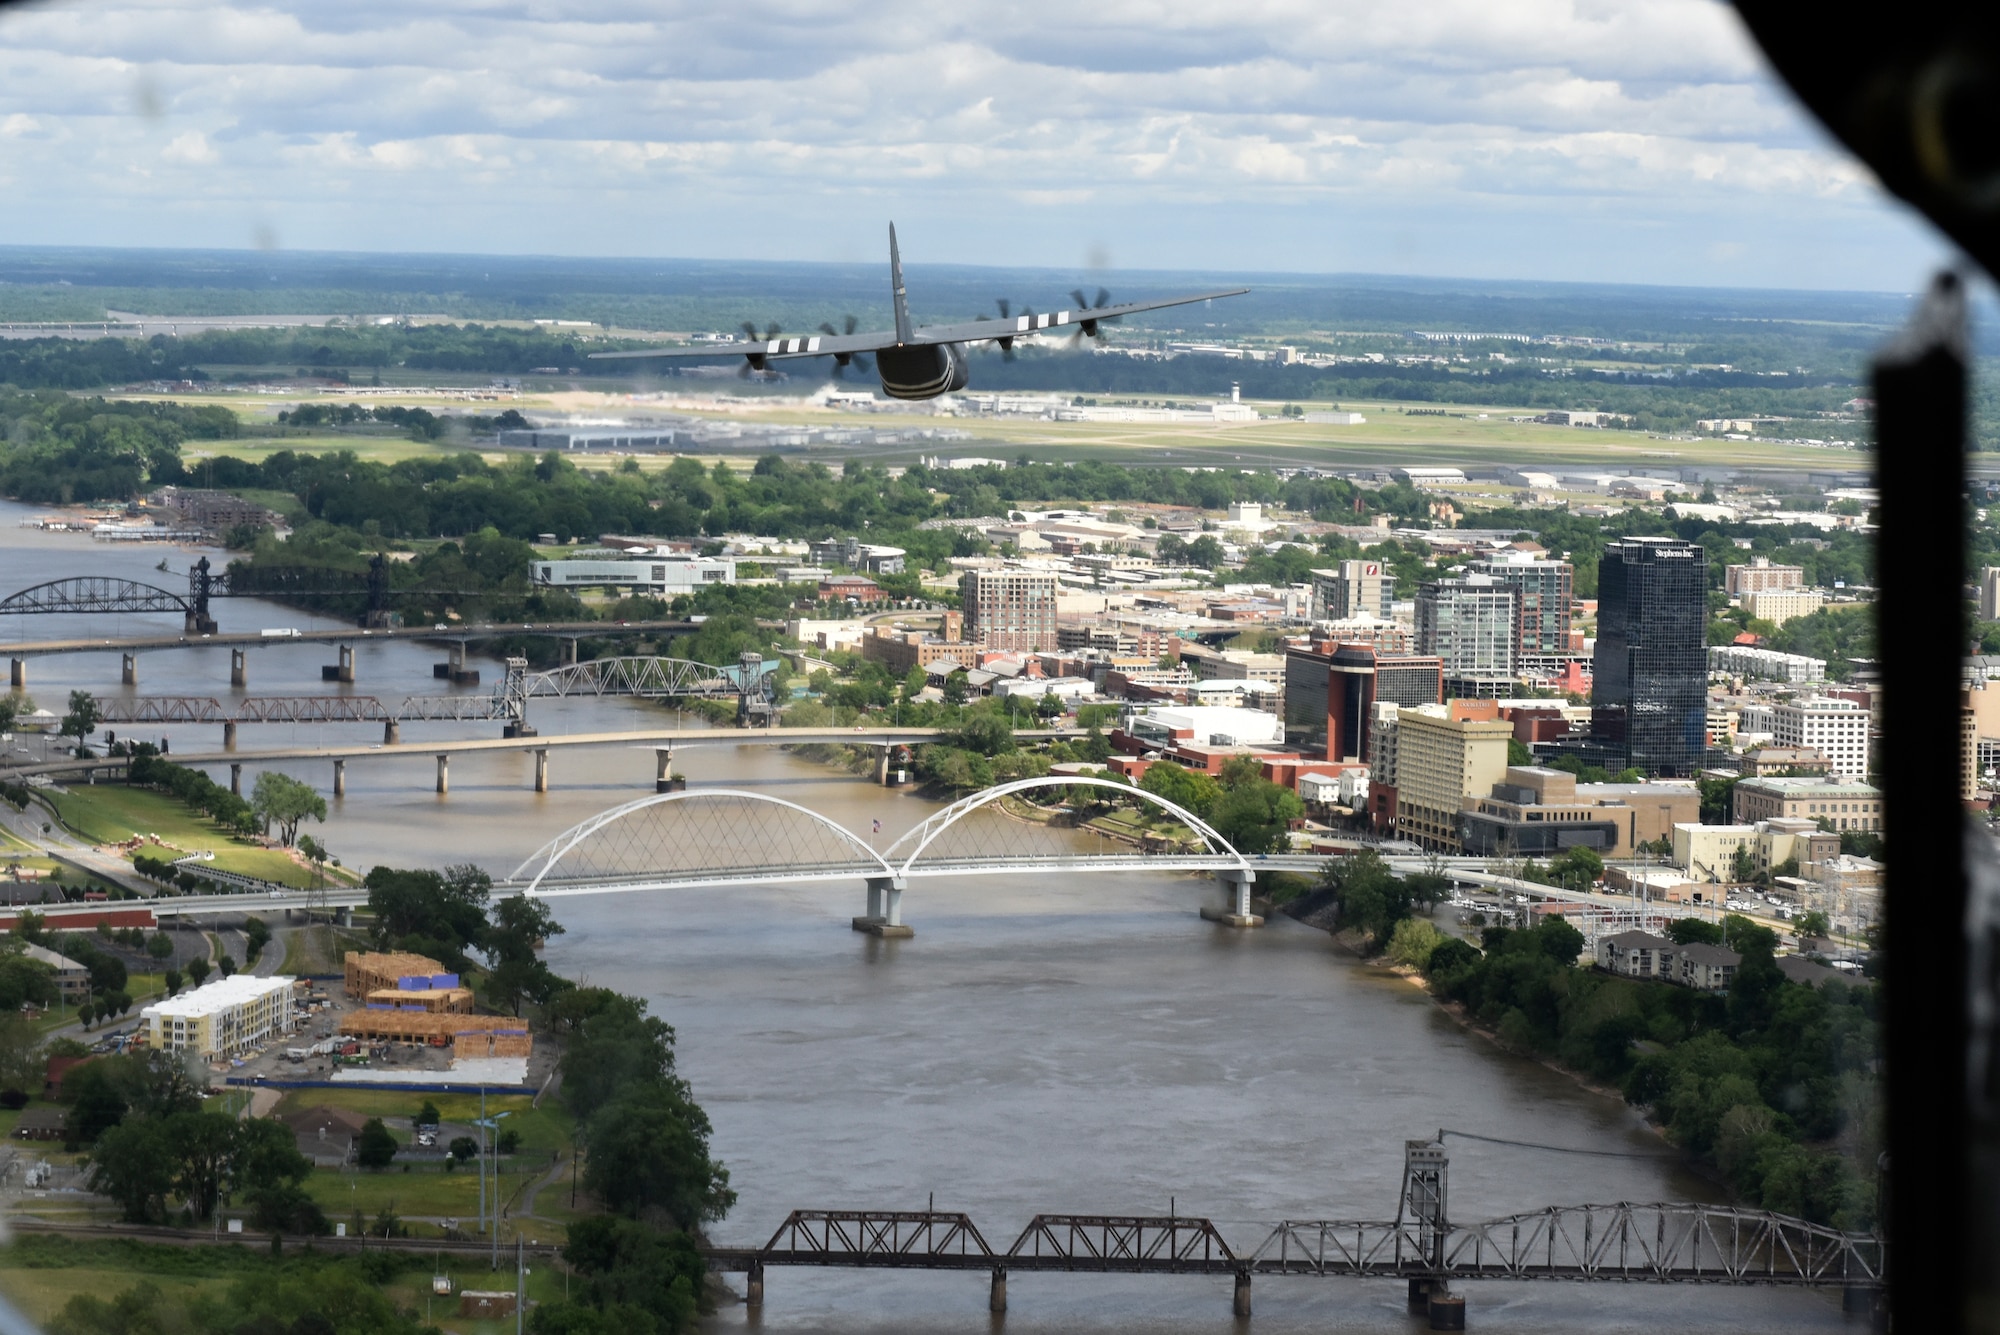 A C-130 flies of the Arkansas River